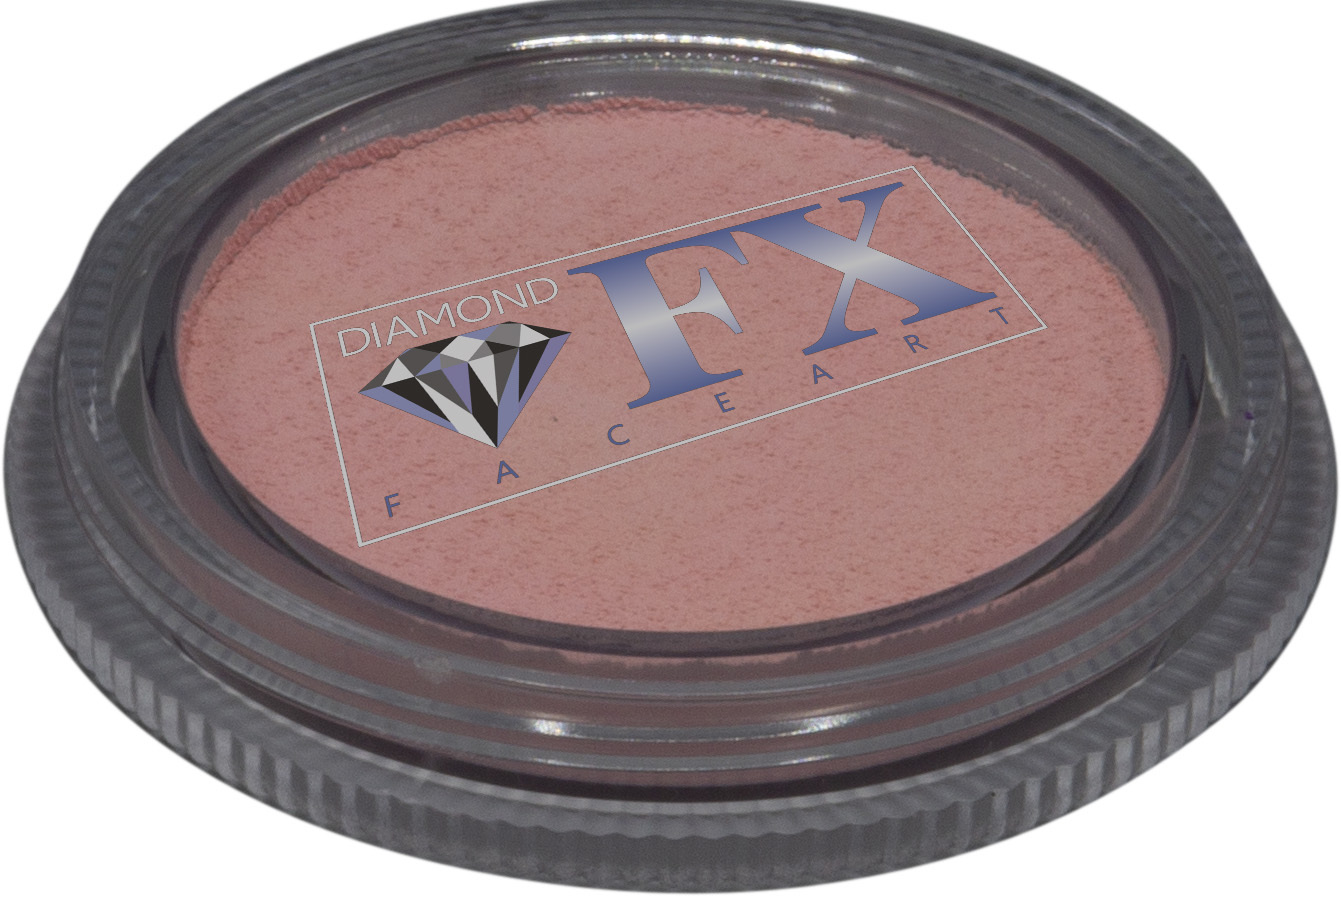 Diamond FX Light Pink 30g - Small Image